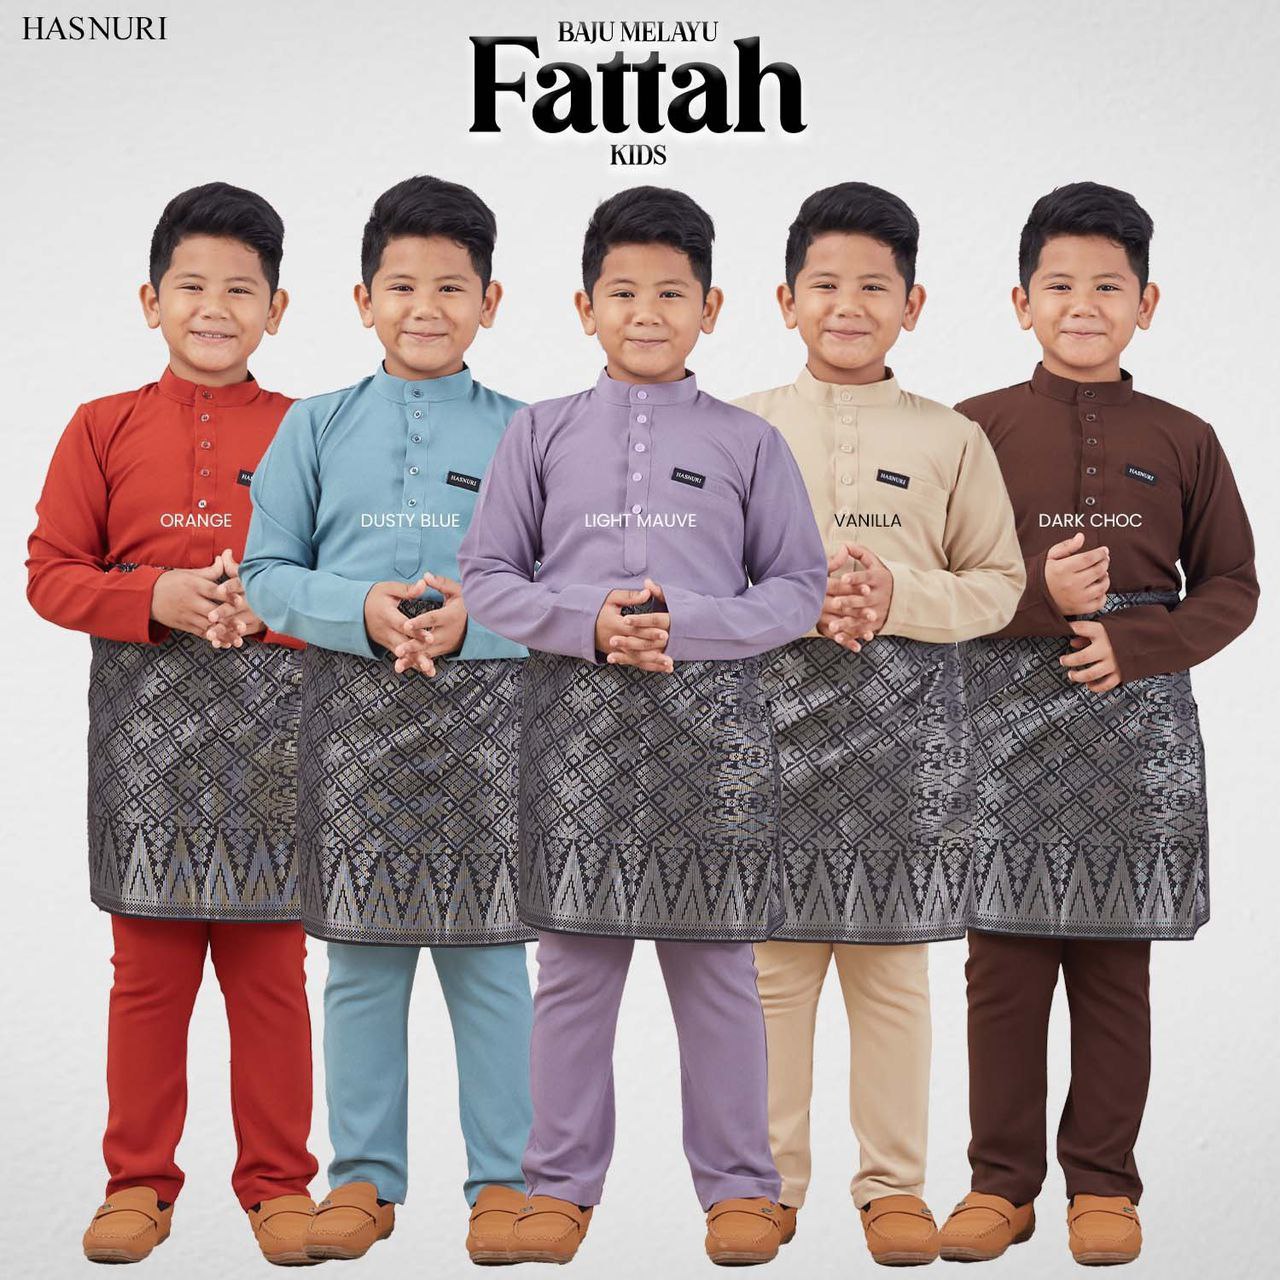 Baju Melayu Fattah Kids - Vanilla